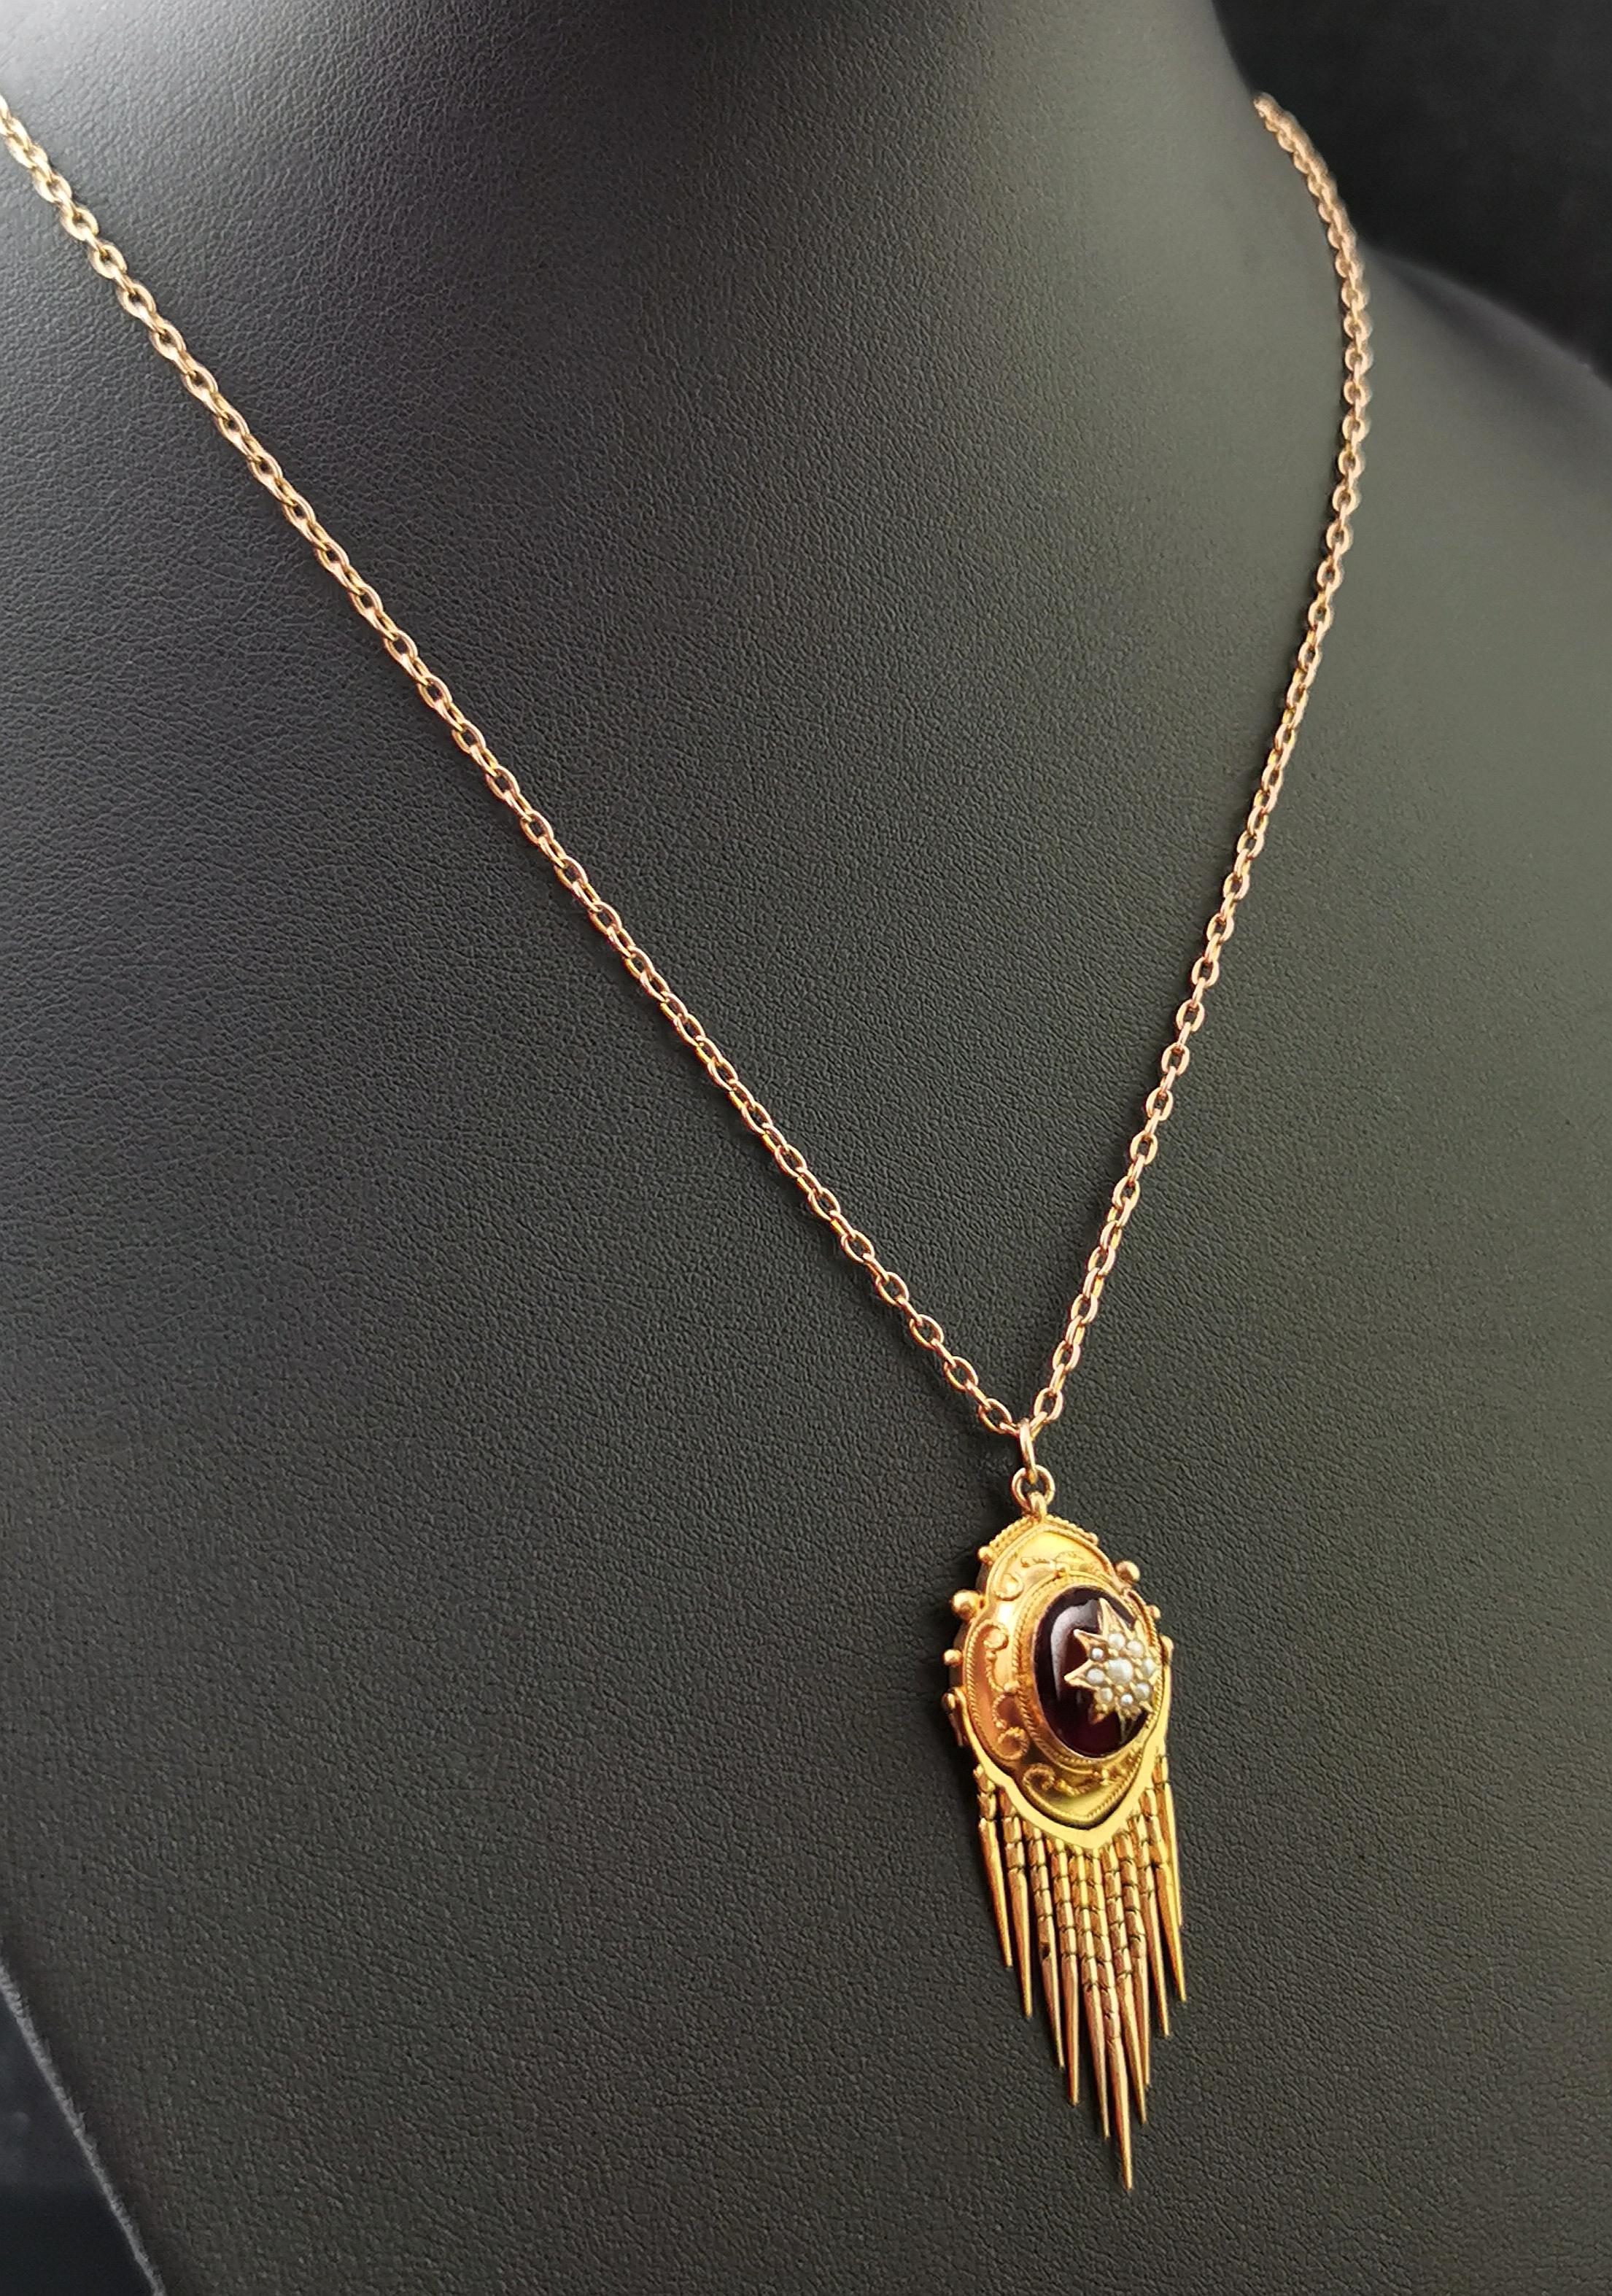 Victorian Garnet and Pearl Tassle Pendant, Necklace, 18 Karat Yellow Gold 5